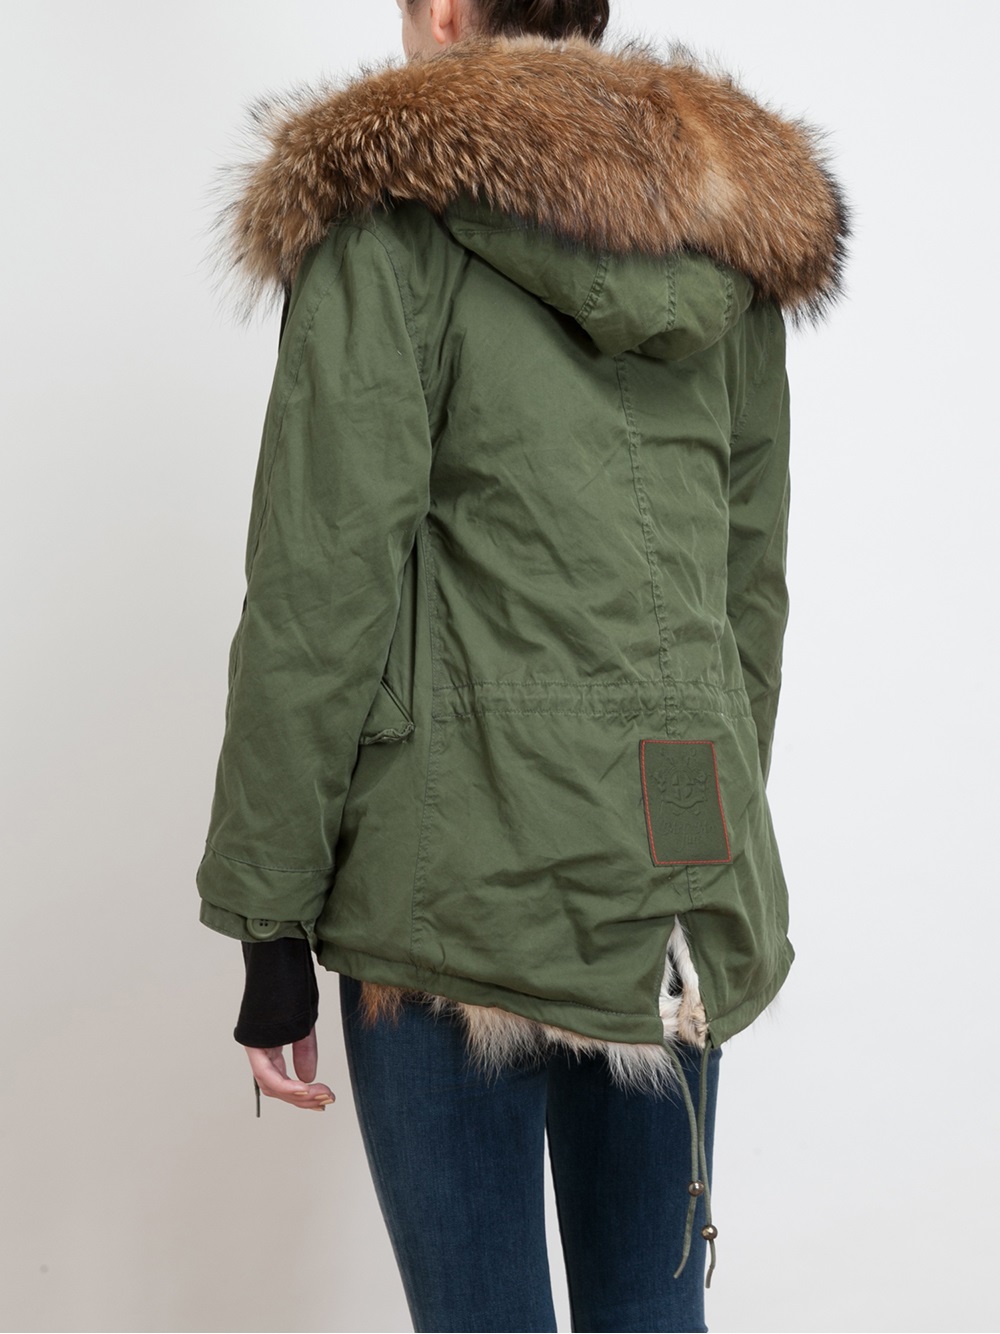 Mr & mrs furs Fur Lined Parka Jacket in Green (multicolour) | Lyst